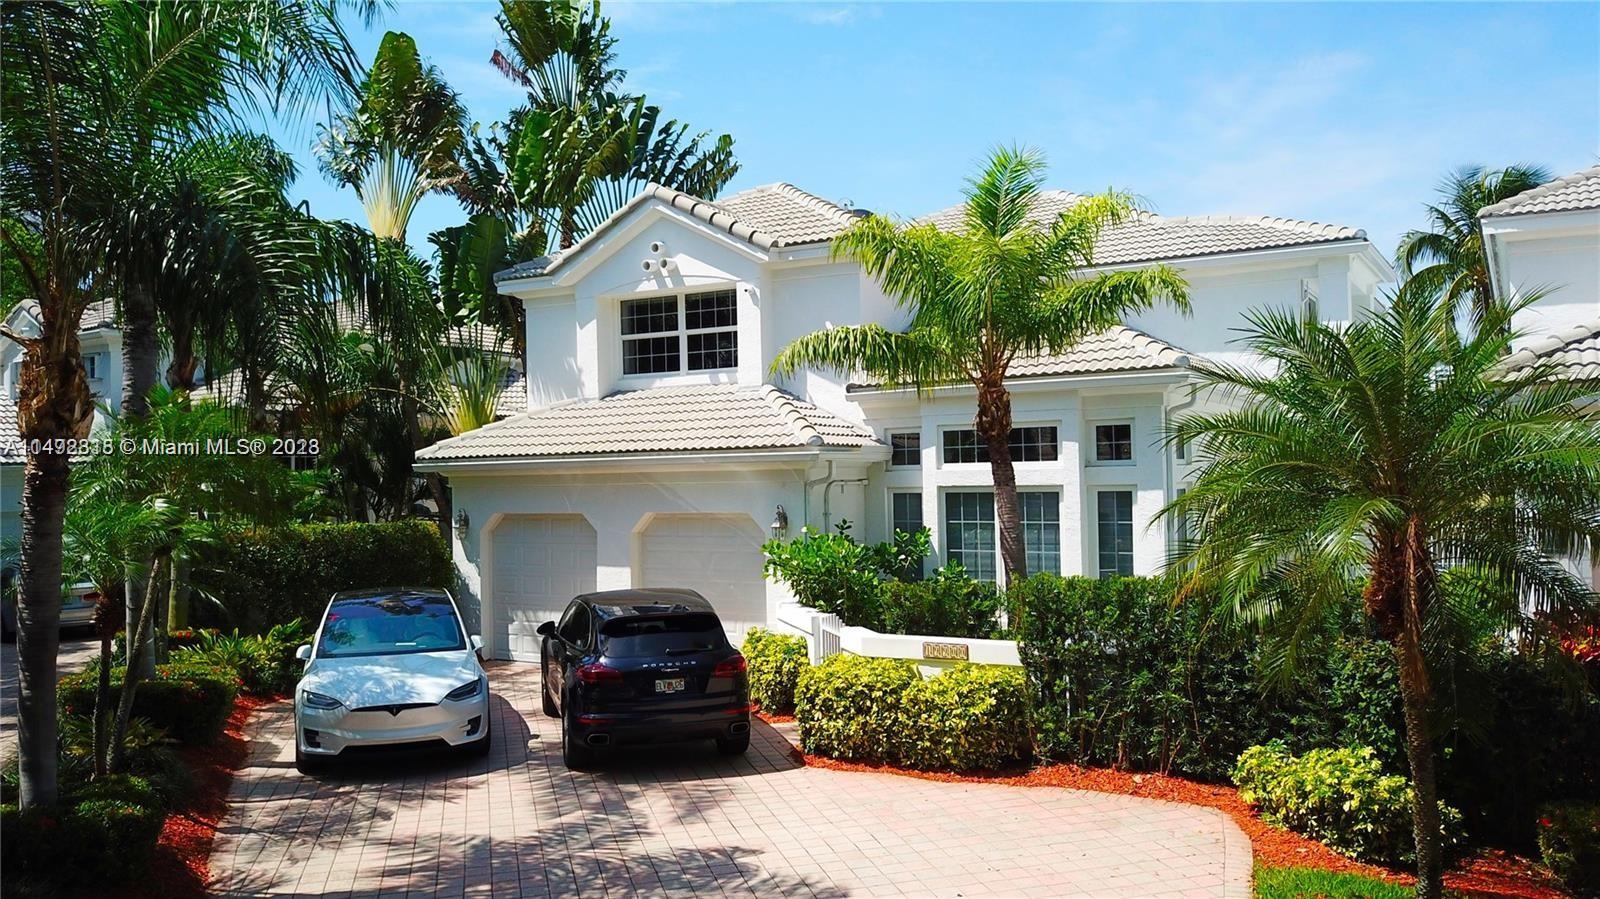 Property for Sale at 19900 Ne 36th Pl Pl, Aventura, Miami-Dade County, Florida - Bedrooms: 5 
Bathrooms: 6  - $2,998,000